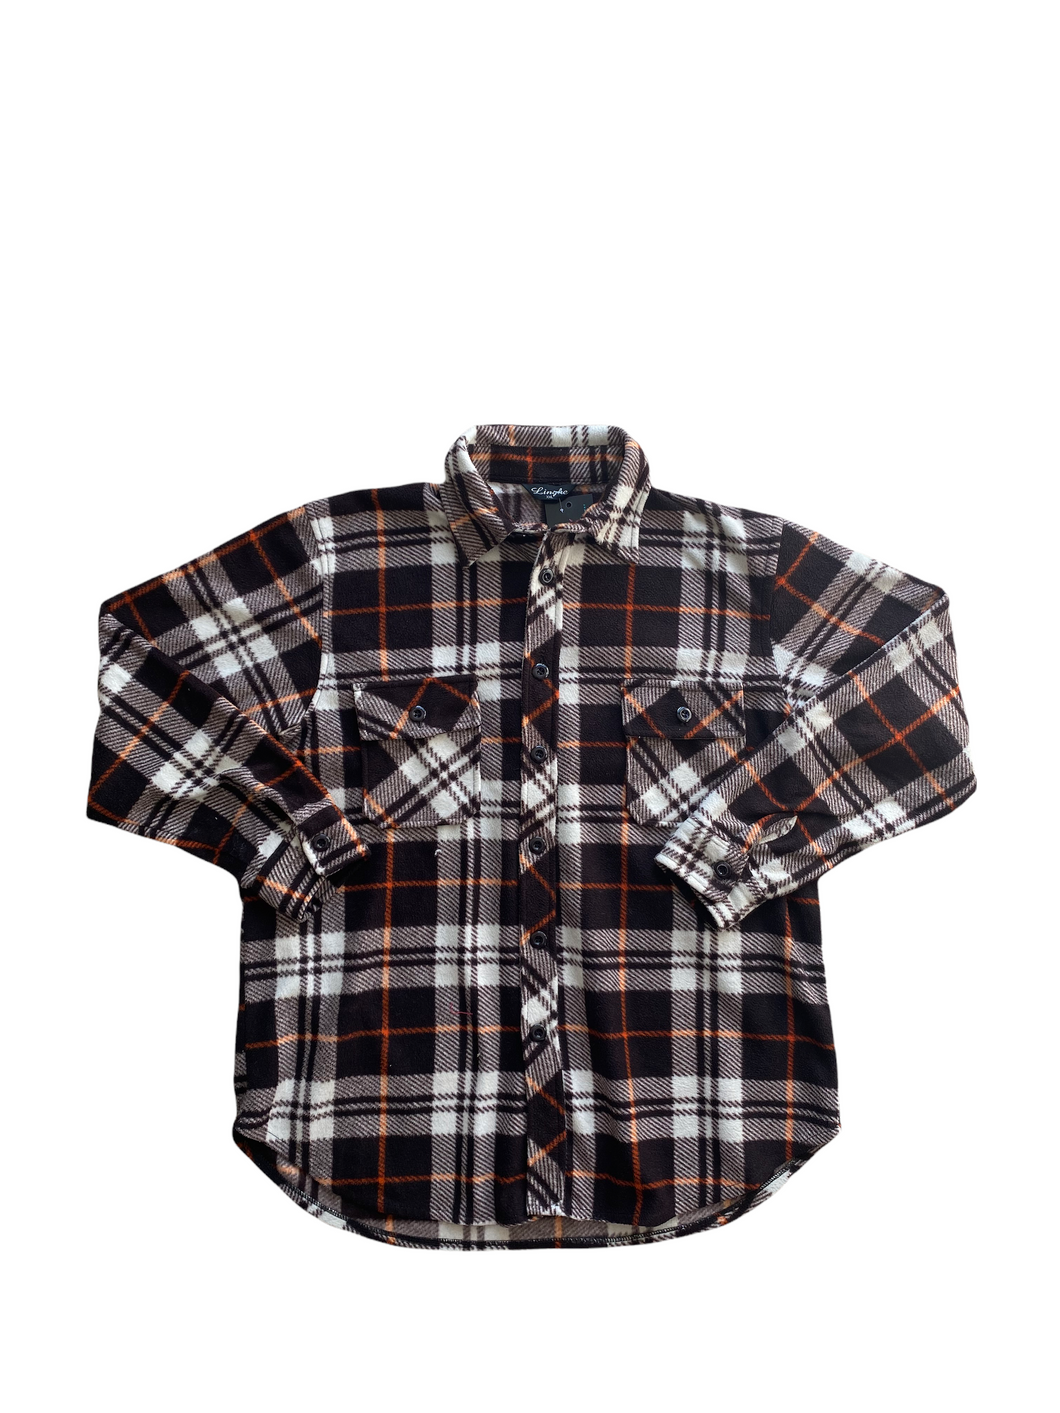 Vintage Brown Checkered Shirt (M)